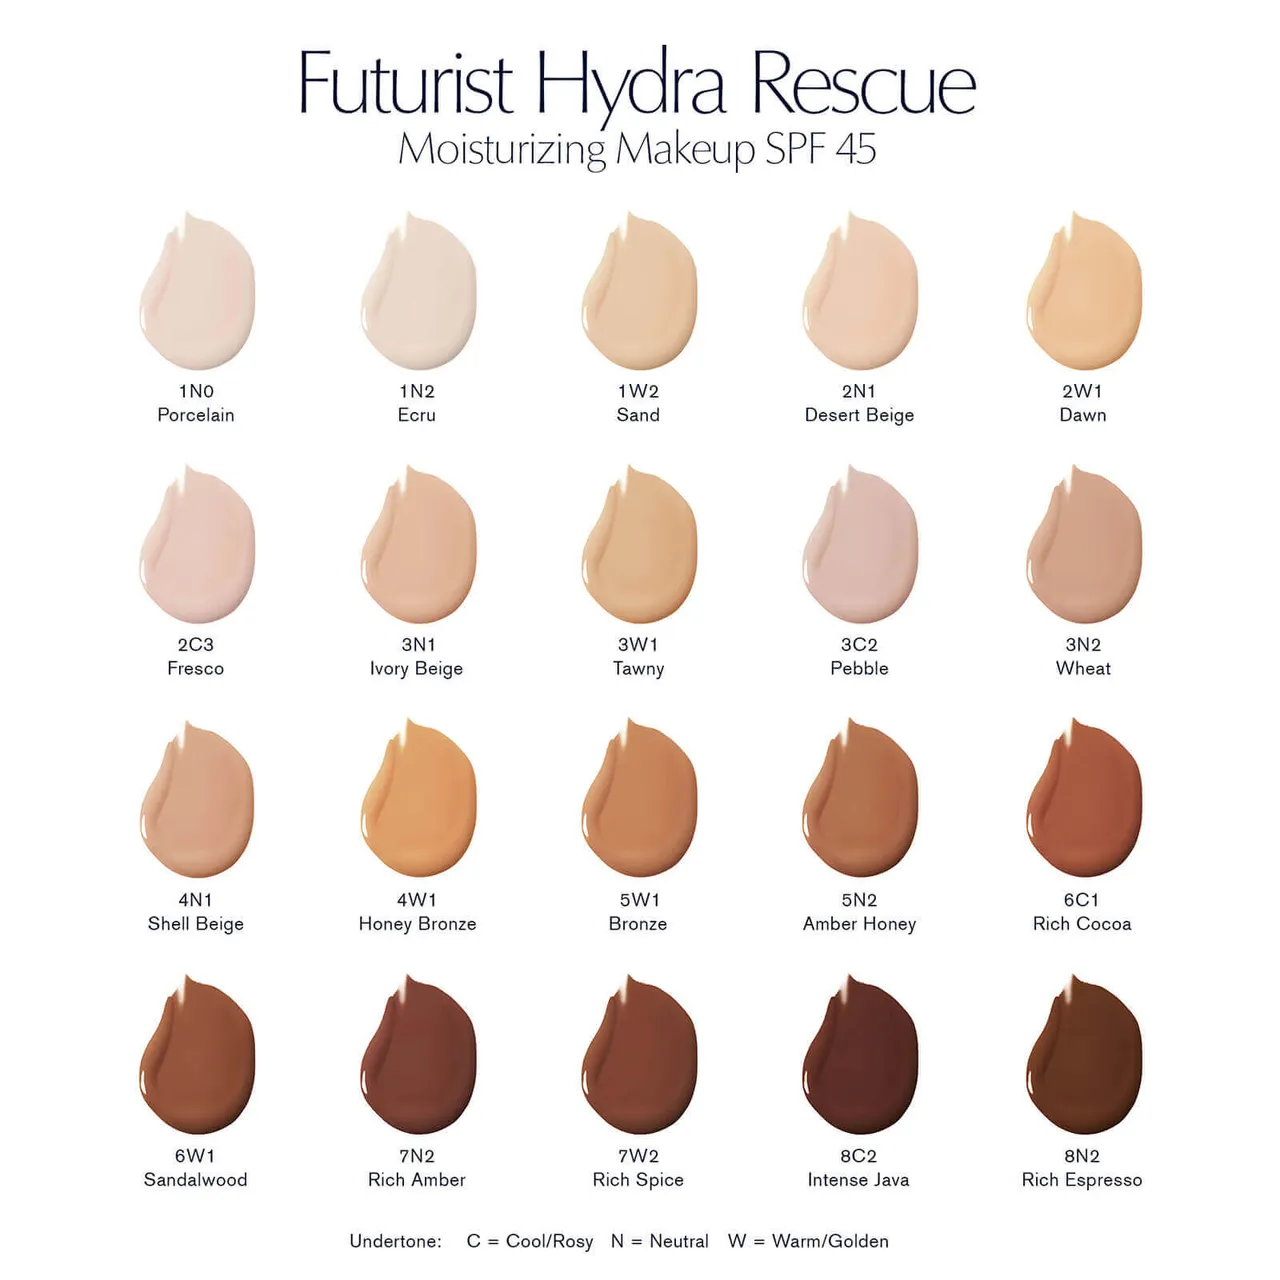 Estée Lauder Futurist Hydra Rescue Moisturizing Makeup Foundation SPF45 (Various Shades) - 3W1 Tawny